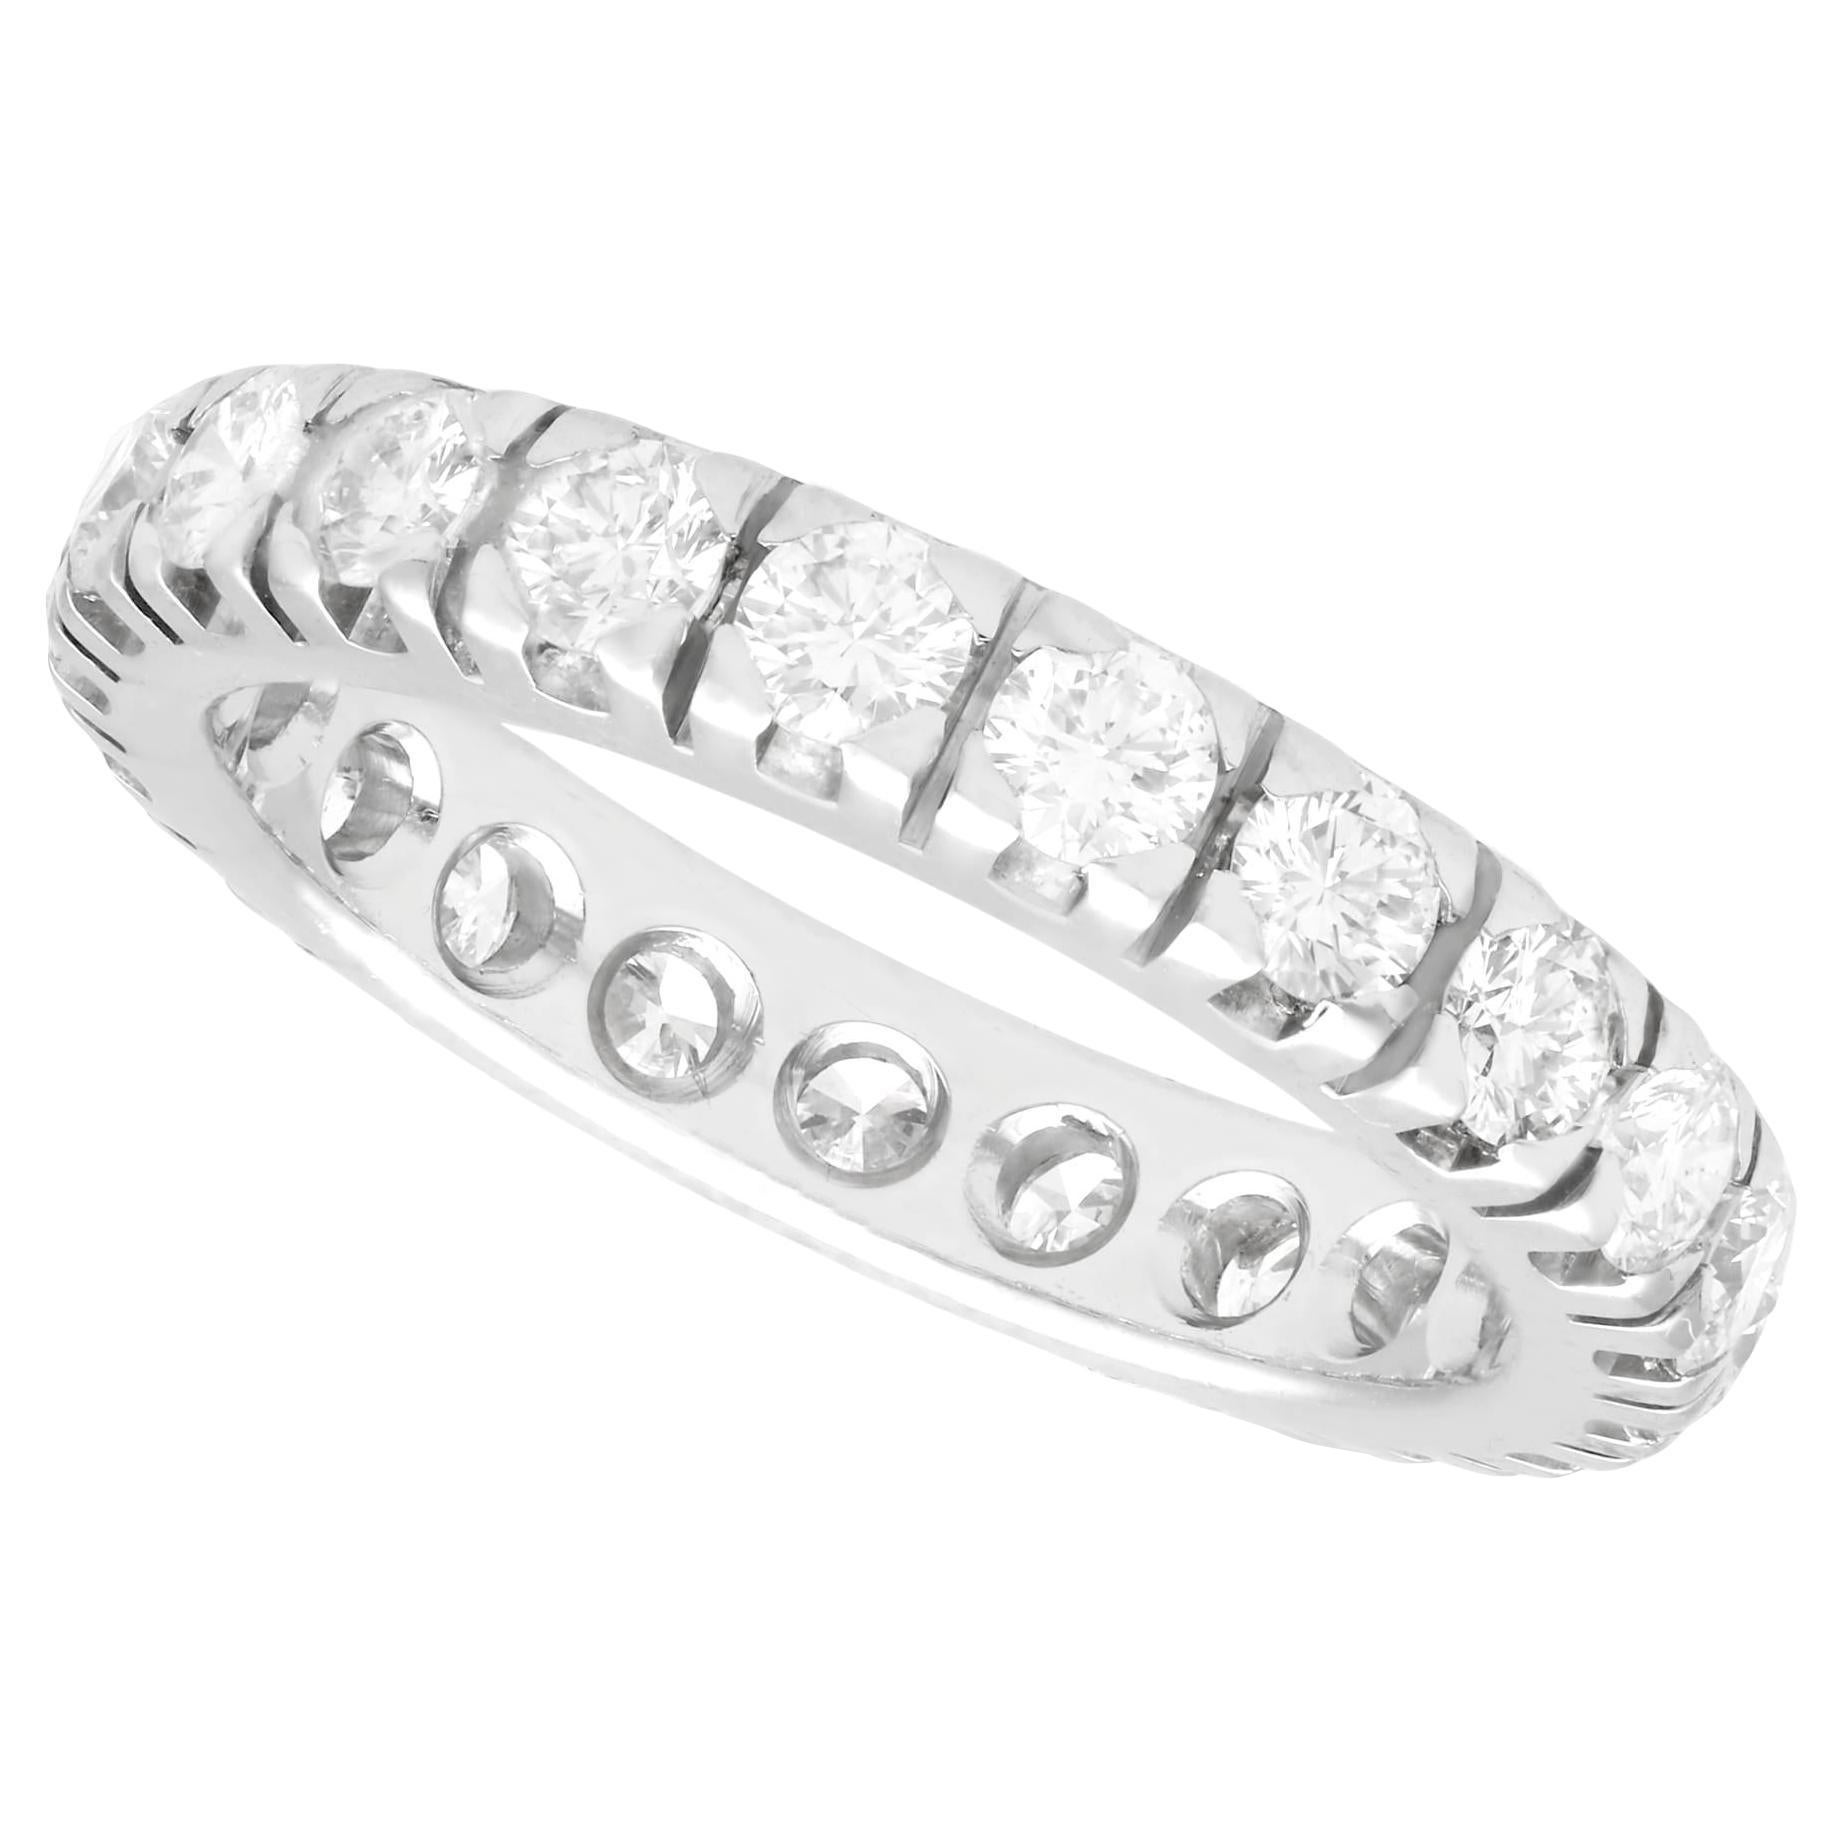 1980s Vintage 1.76 Carat Diamond and White Gold Full Eternity Ring